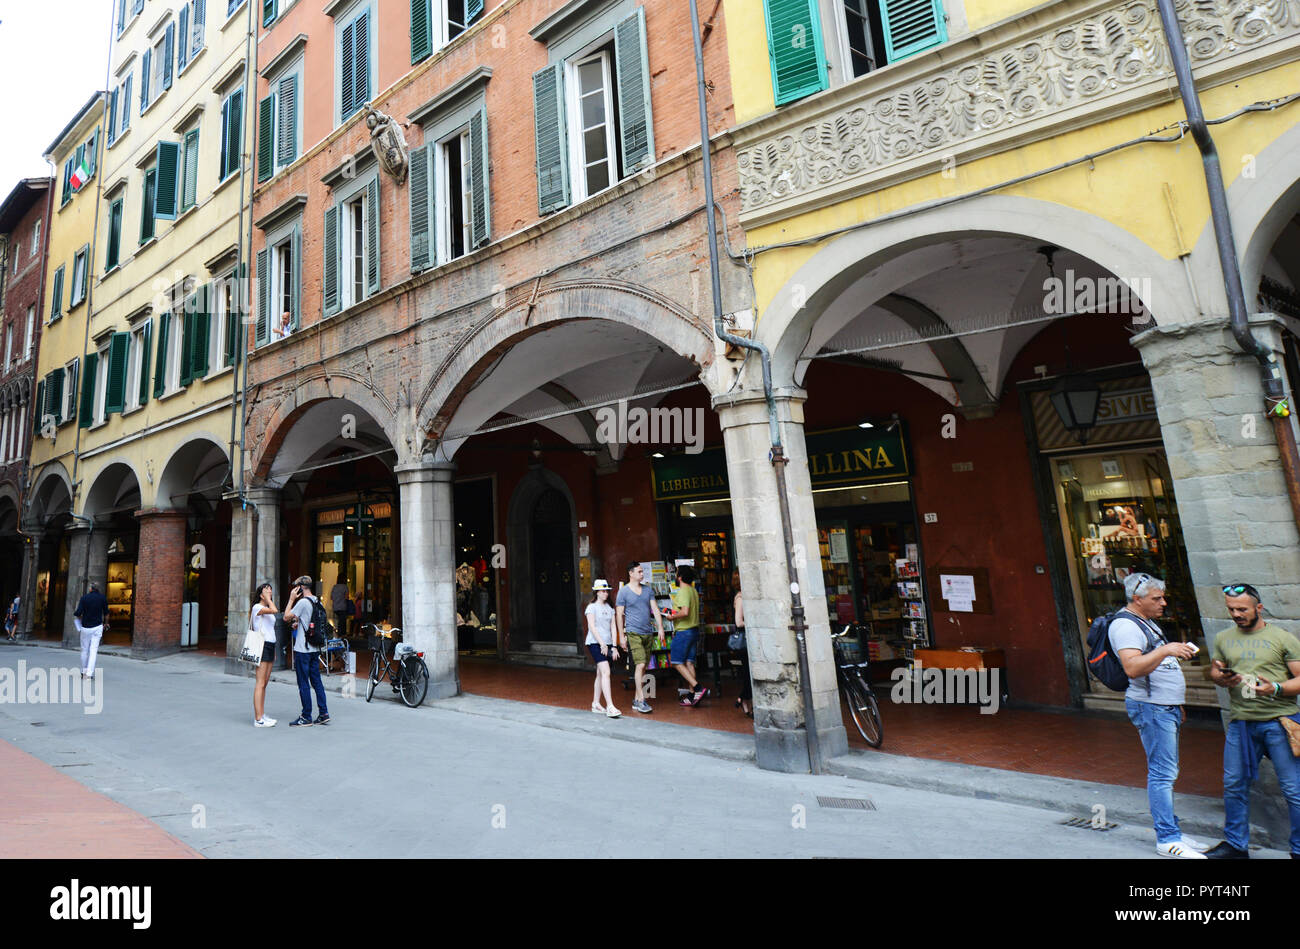 The Vibrant Corso Italia pedestrian street in Pisa, Italy. Stock Photo